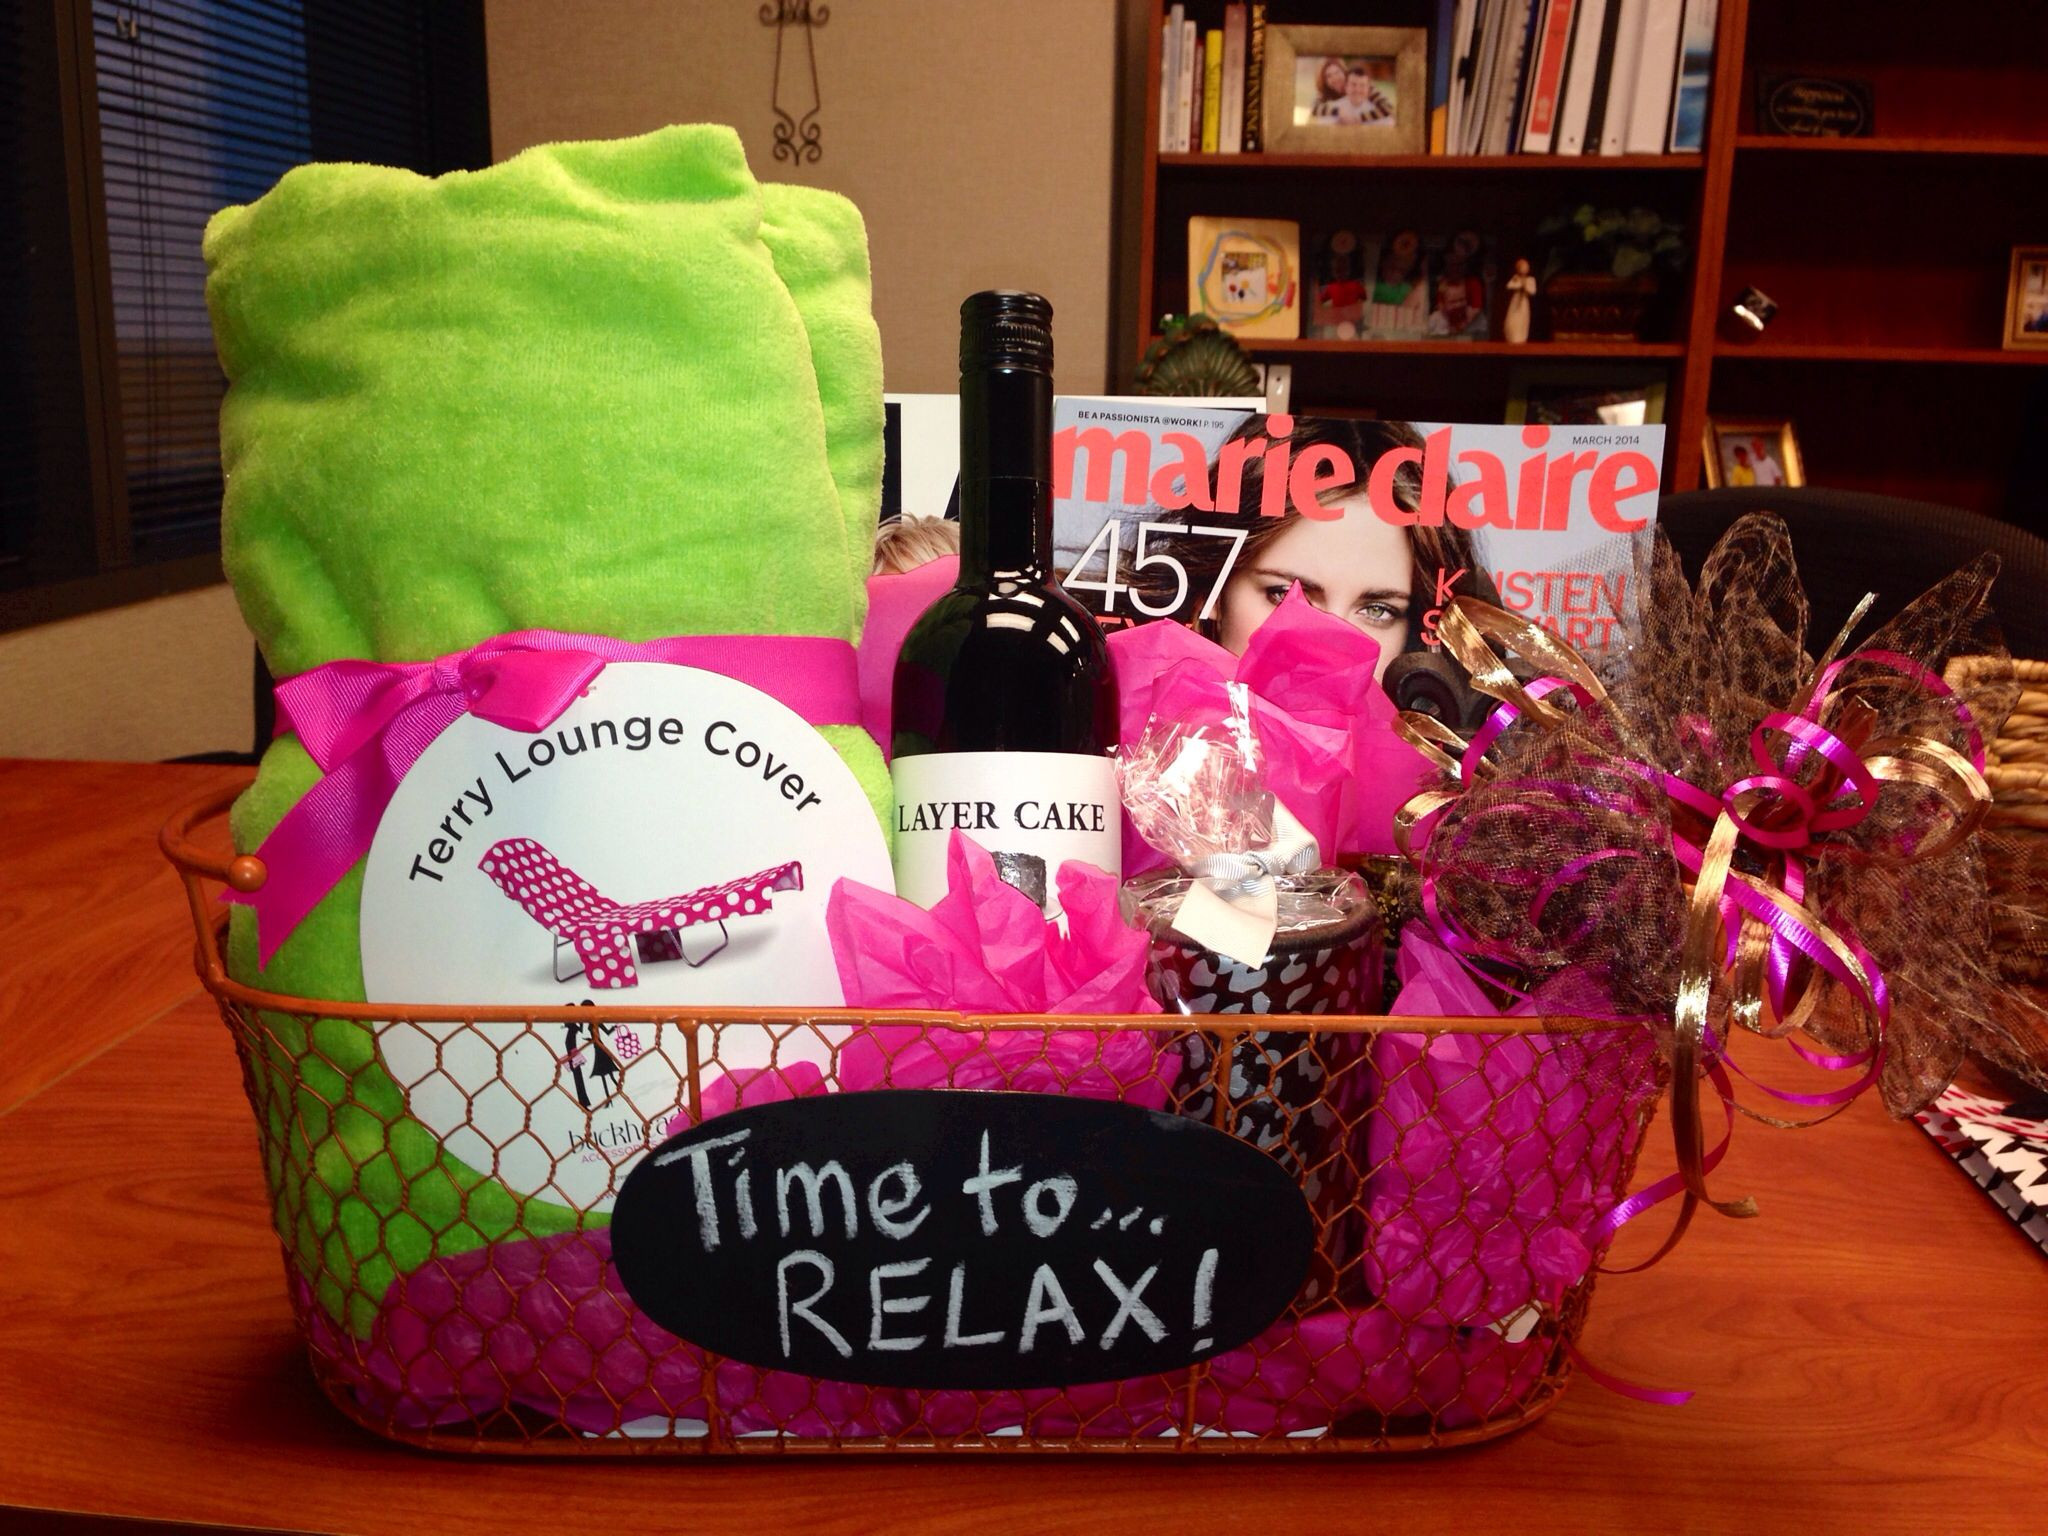 Cute Gift Basket Ideas For Girlfriend
 Relaxation Gift Basket CUTE GIFT IDEAS